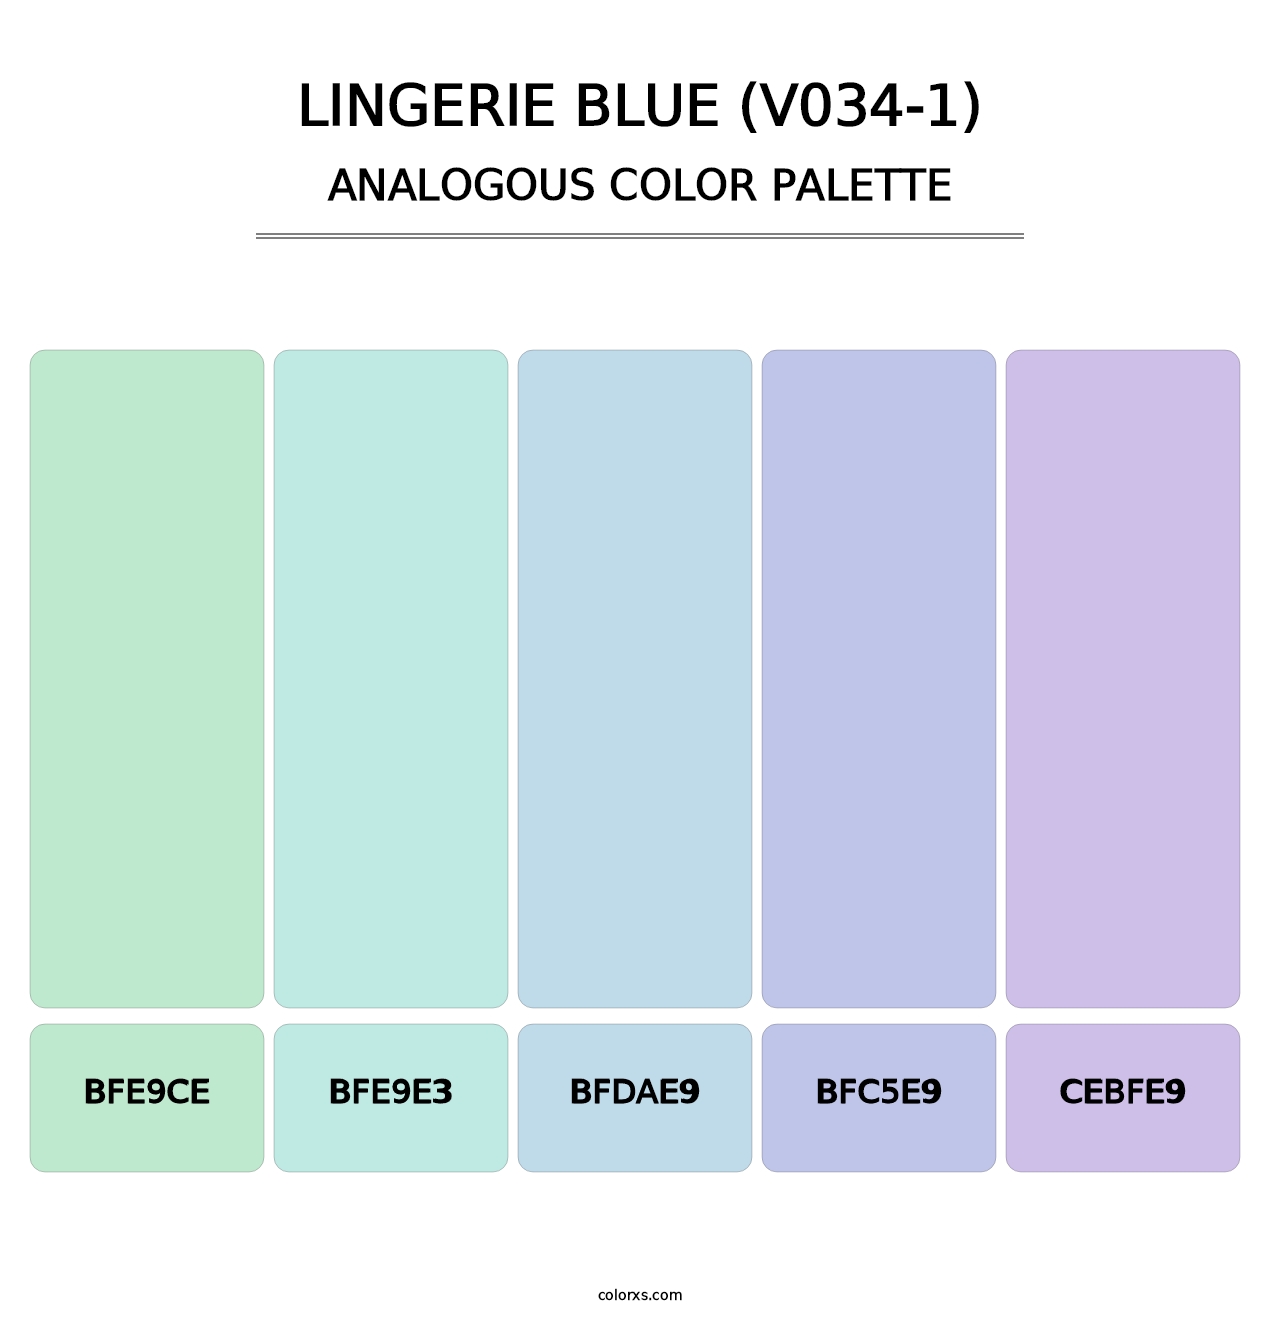 Lingerie Blue (V034-1) - Analogous Color Palette